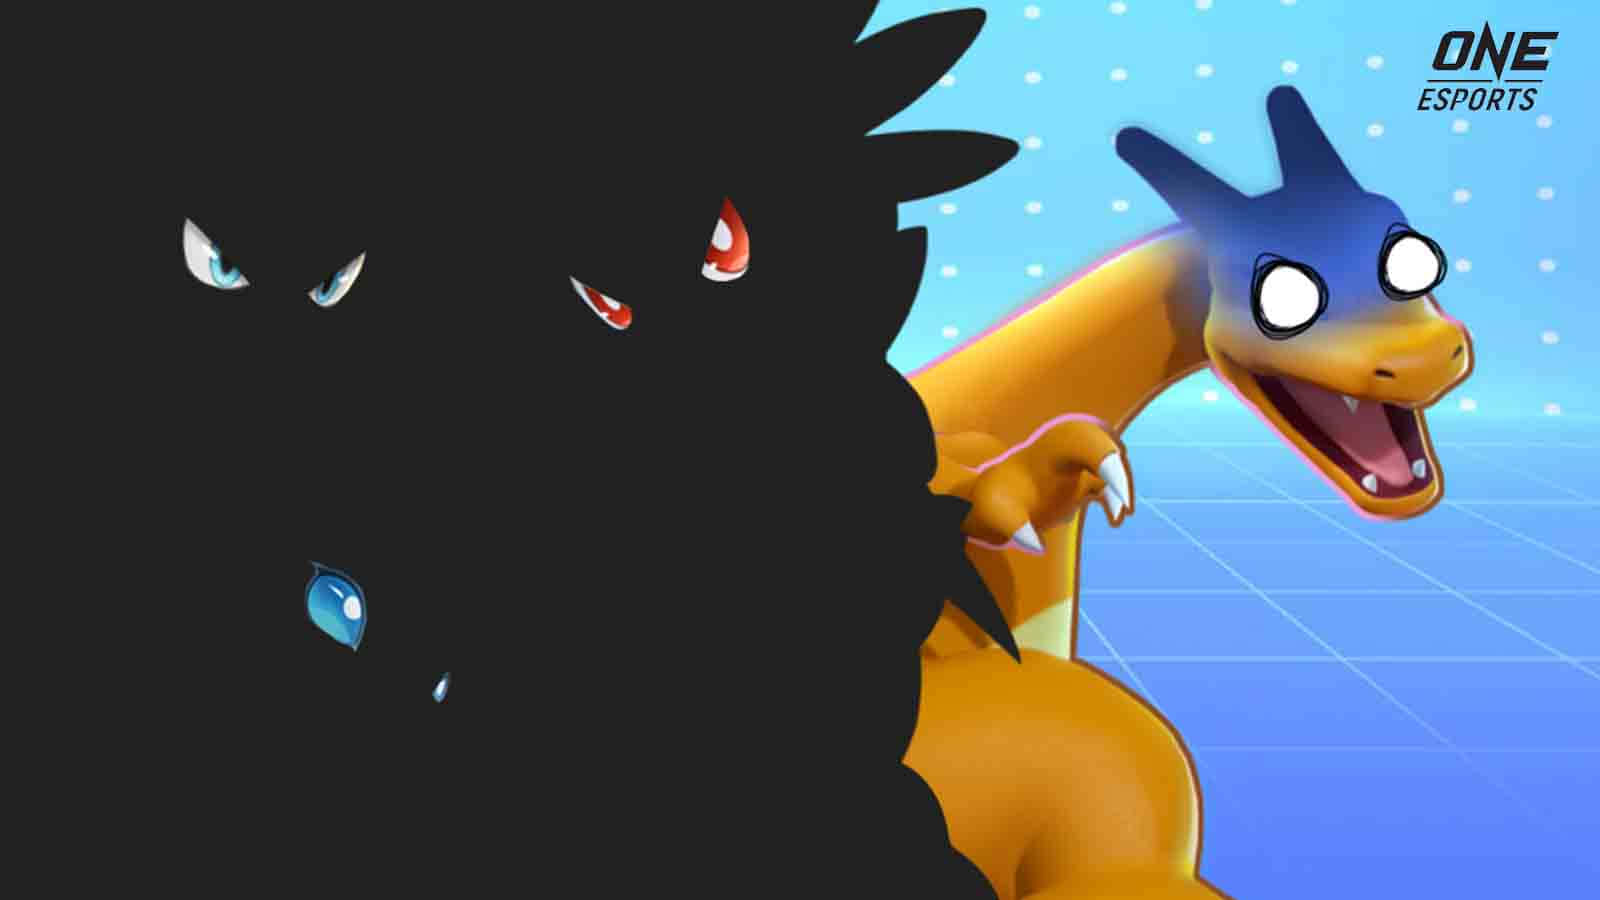 Charizard, the King of Fire-Type Pokémon